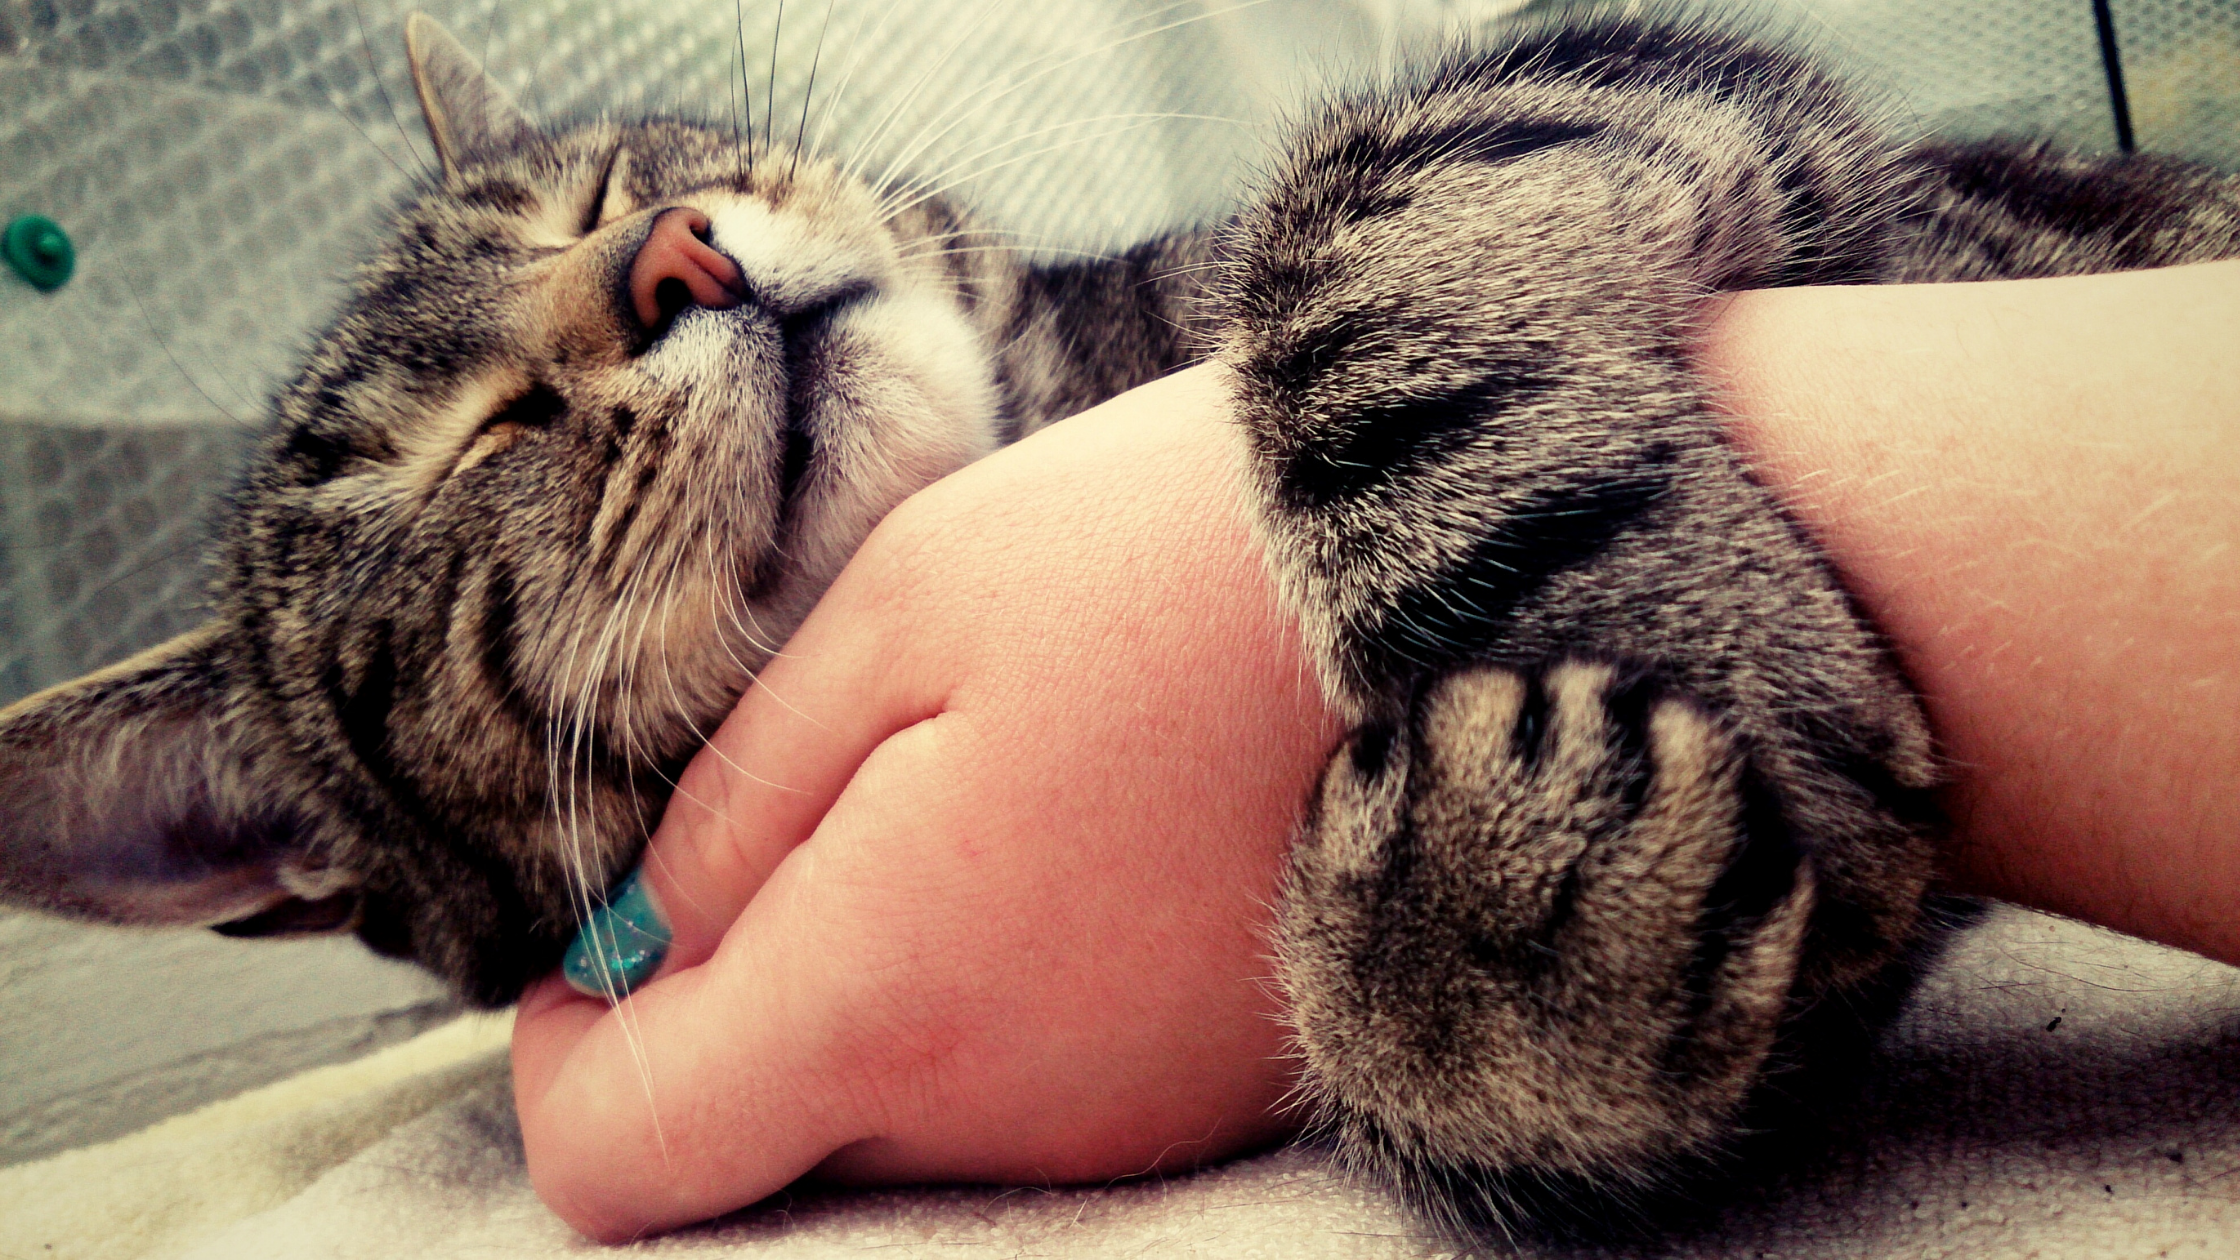 Мурчание котика. Котенок на руках. Котик обнимает человека. Держит кота. Котик обнимает руку.